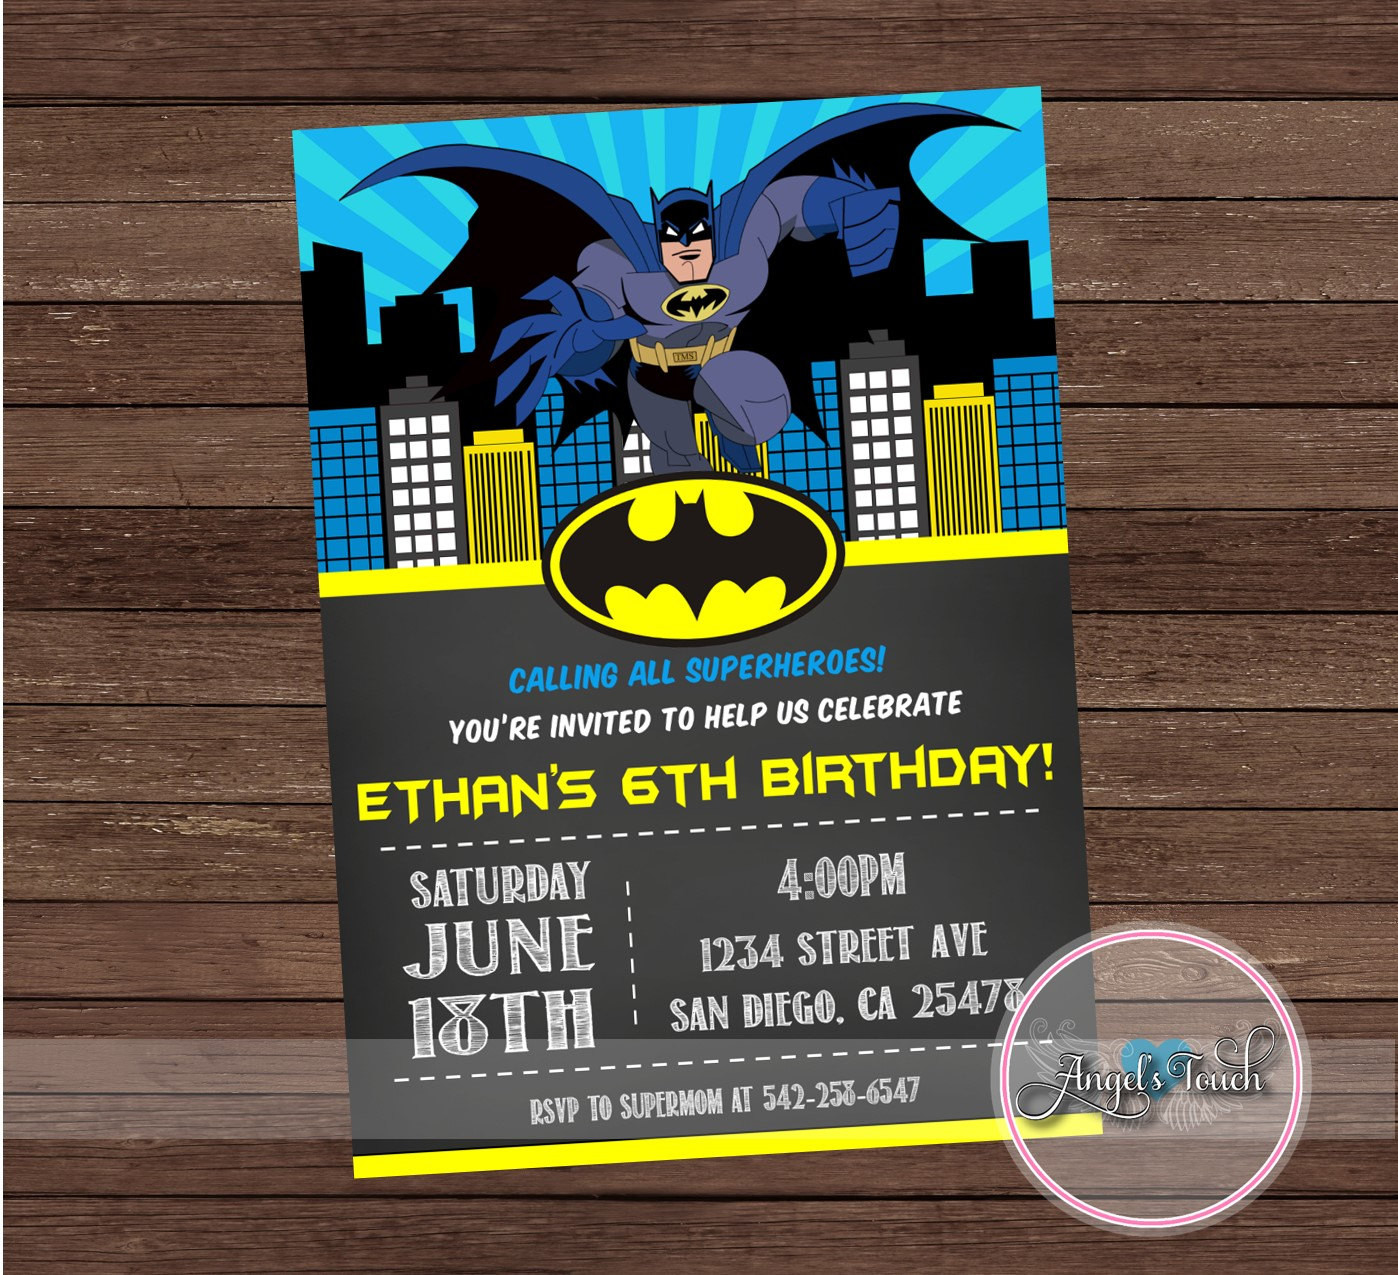 Best ideas about Batman Birthday Invitations
. Save or Pin Batman Party Invitation Batman Birthday Invitation Batman Now.